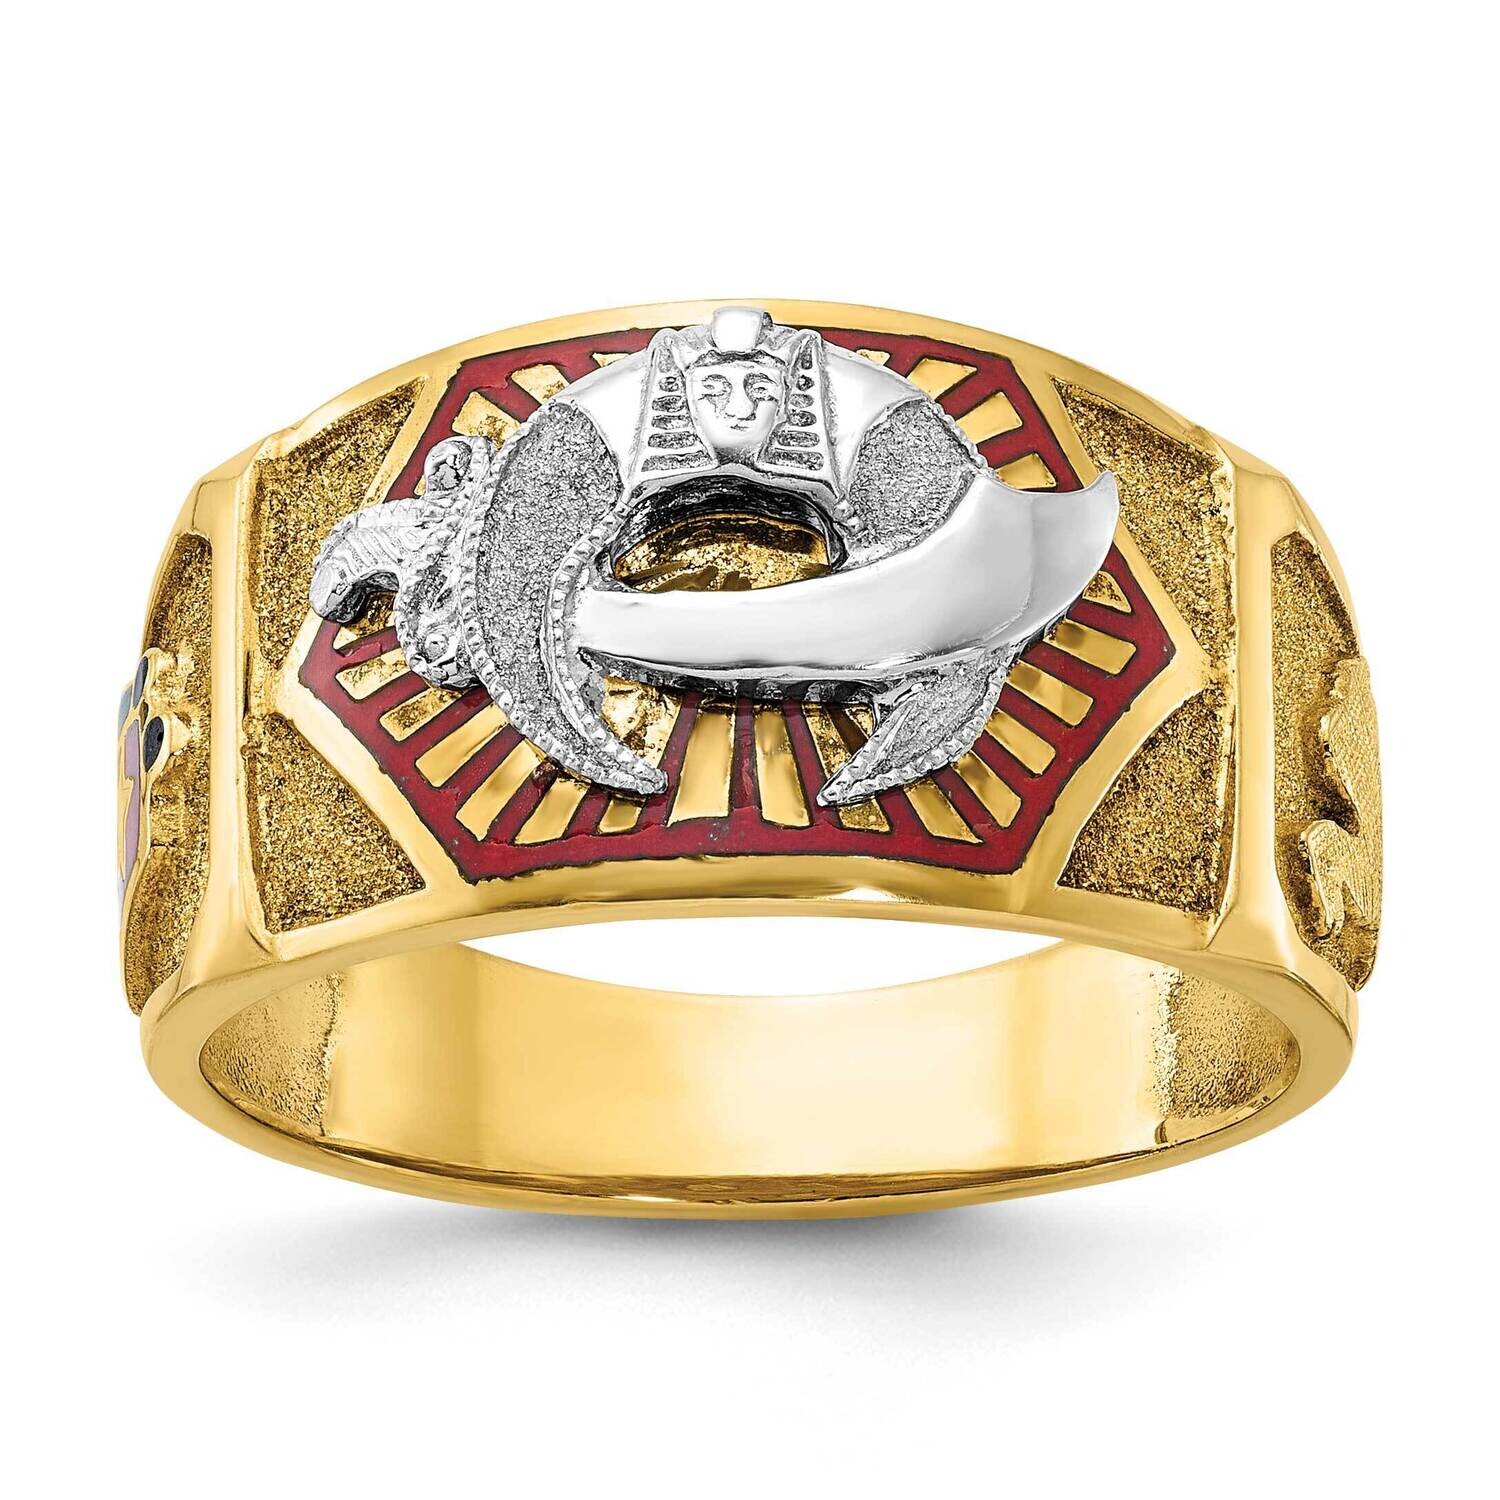 Ibgoodman Men's Polished Textured Multi-Color Enamel Masonic Shriner's Ring 10k Two-Tone Gold B02420-0YW